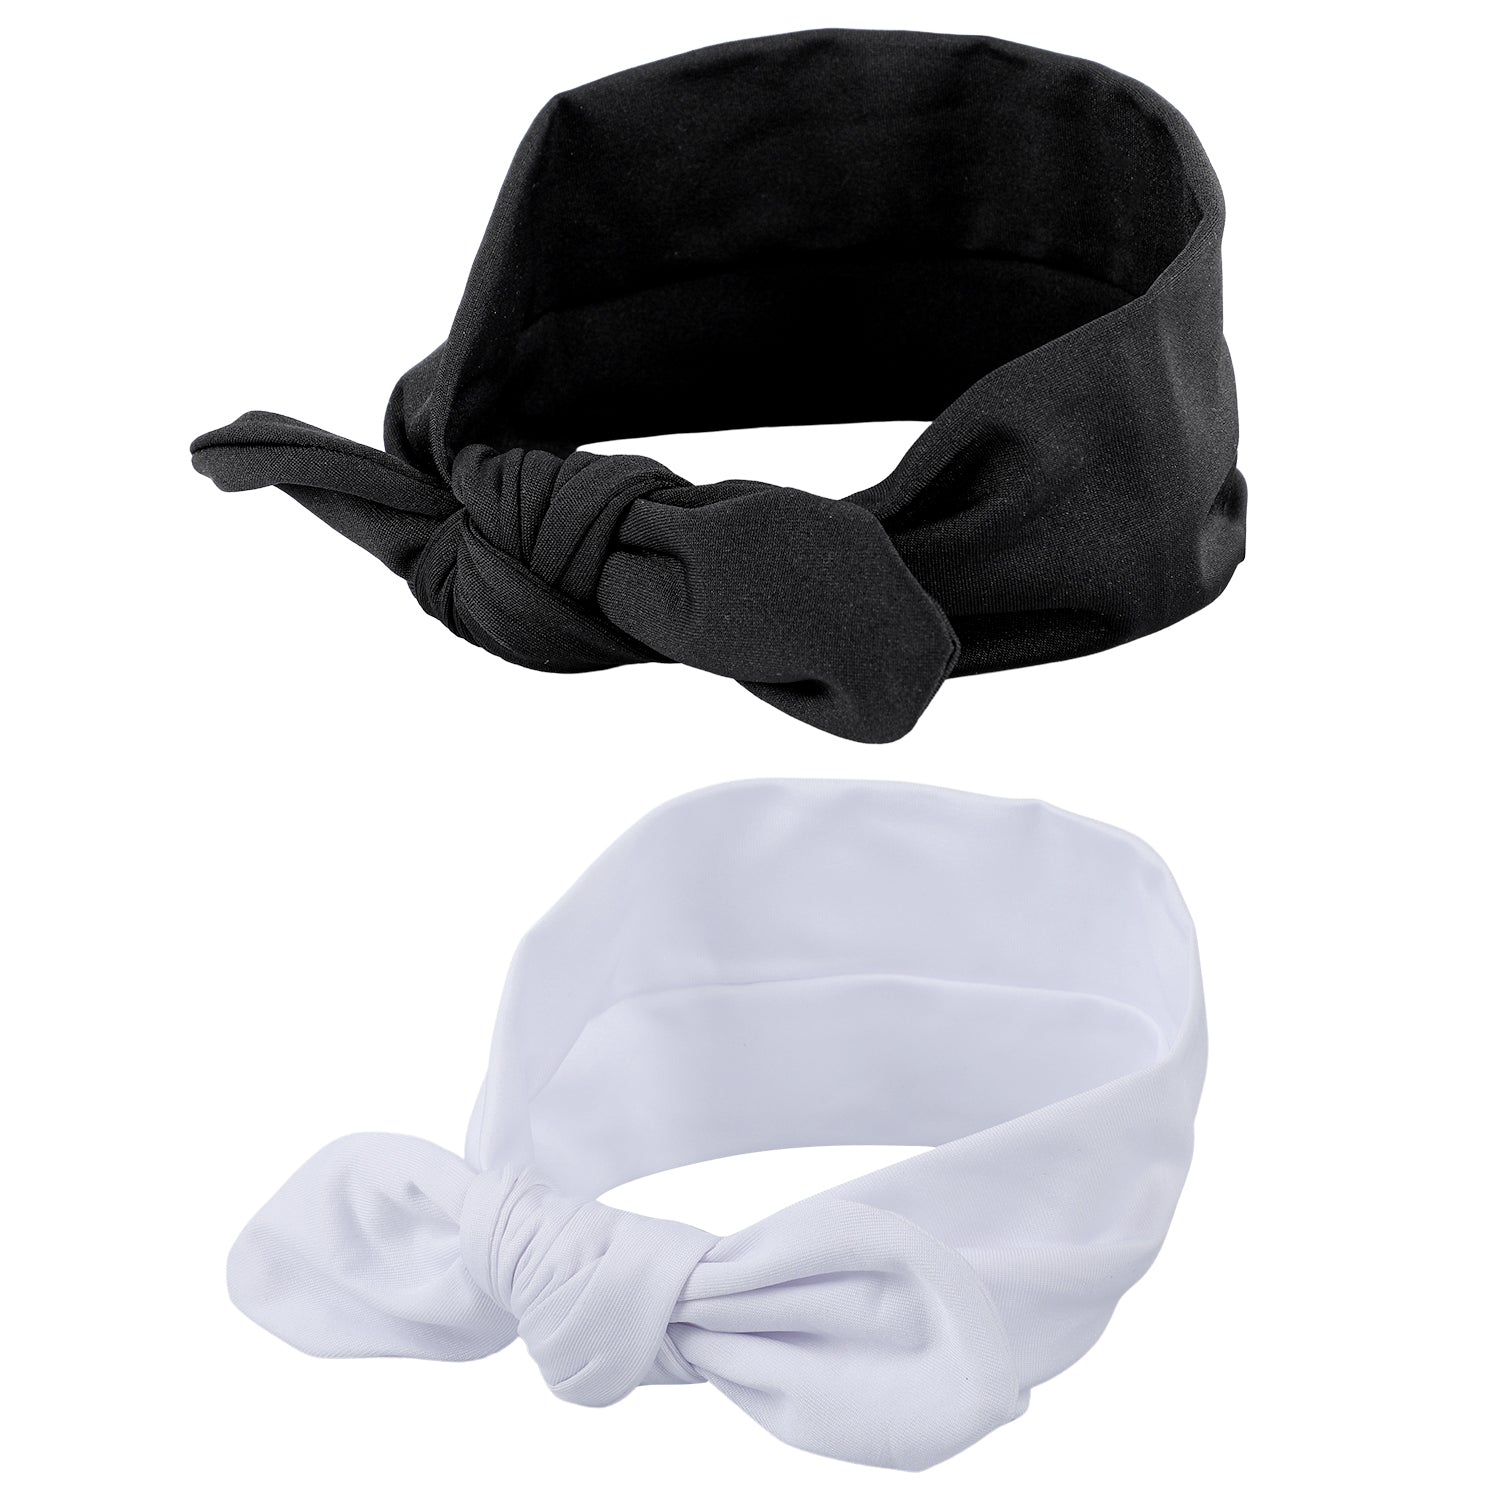 Bow Knot Headbands Set of 2 - White, Black